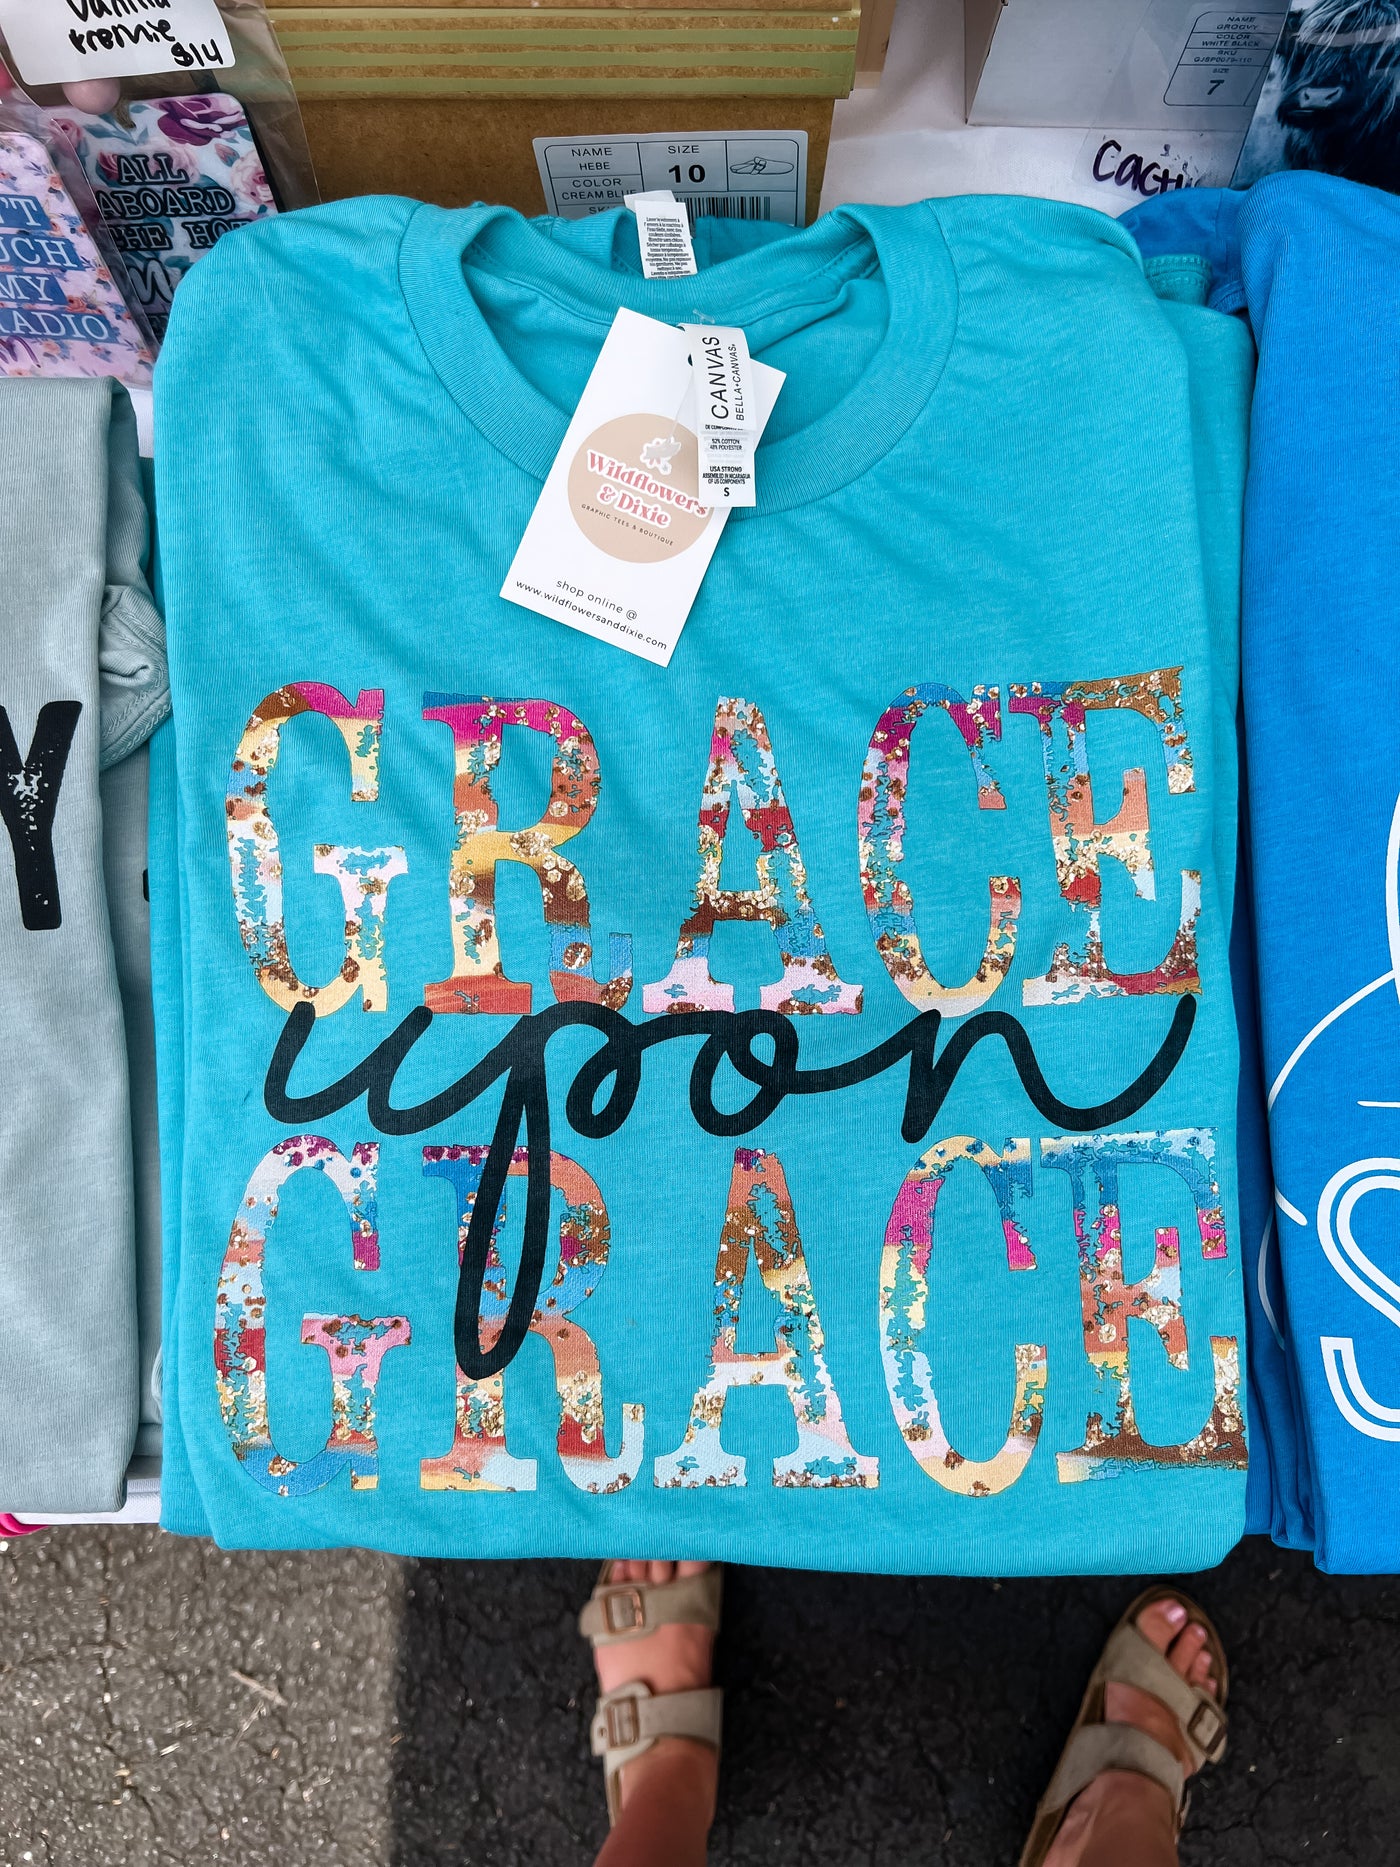 CLEARANCE "Grace Upon Grace" T-shirt